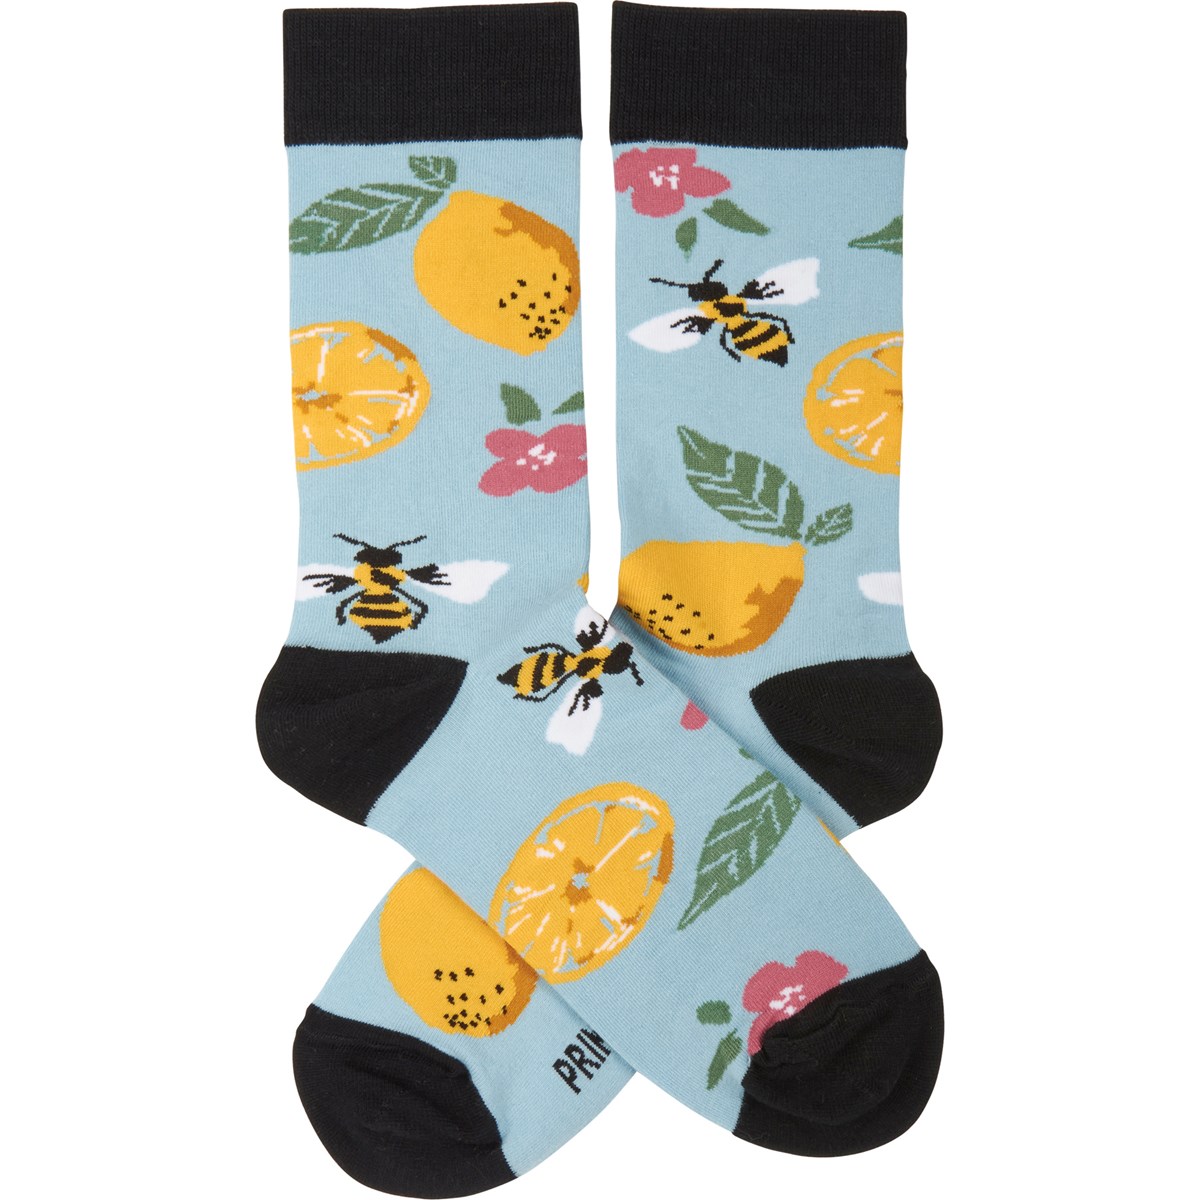 Lemons And Bees Socks - Cotton, Nylon, Spandex